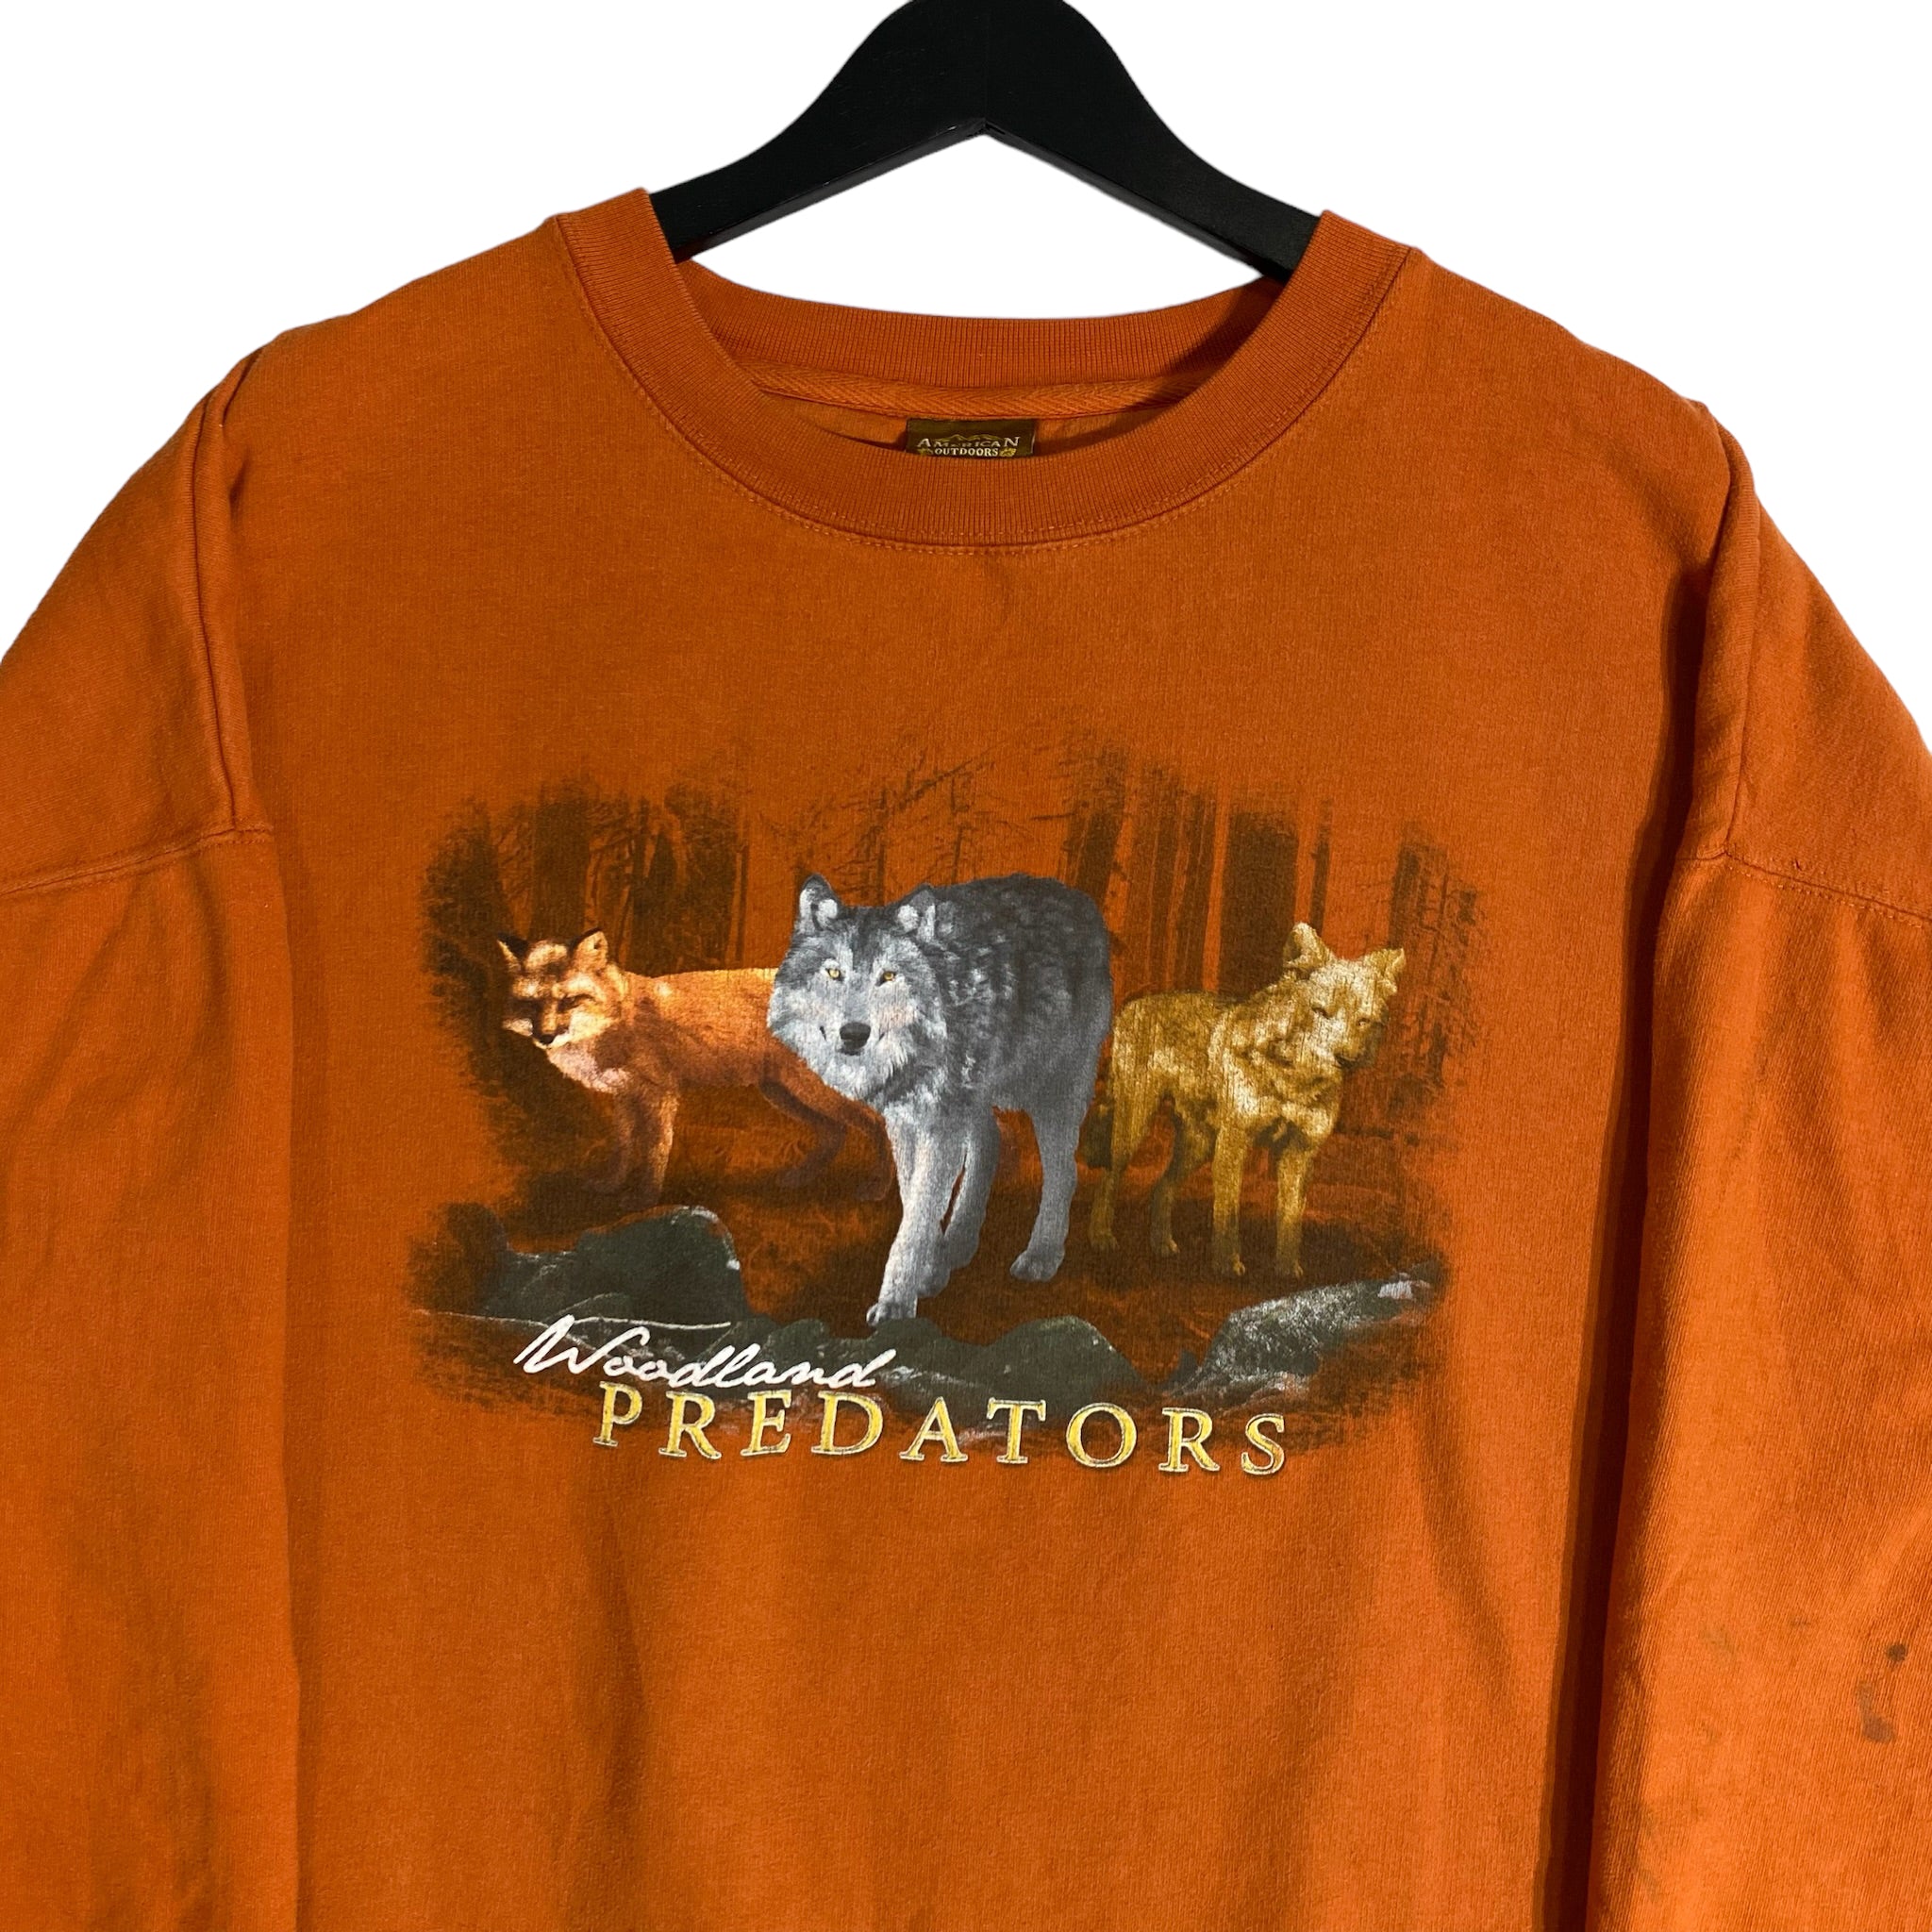 Vintage "Woodlands Predators" Crewneck